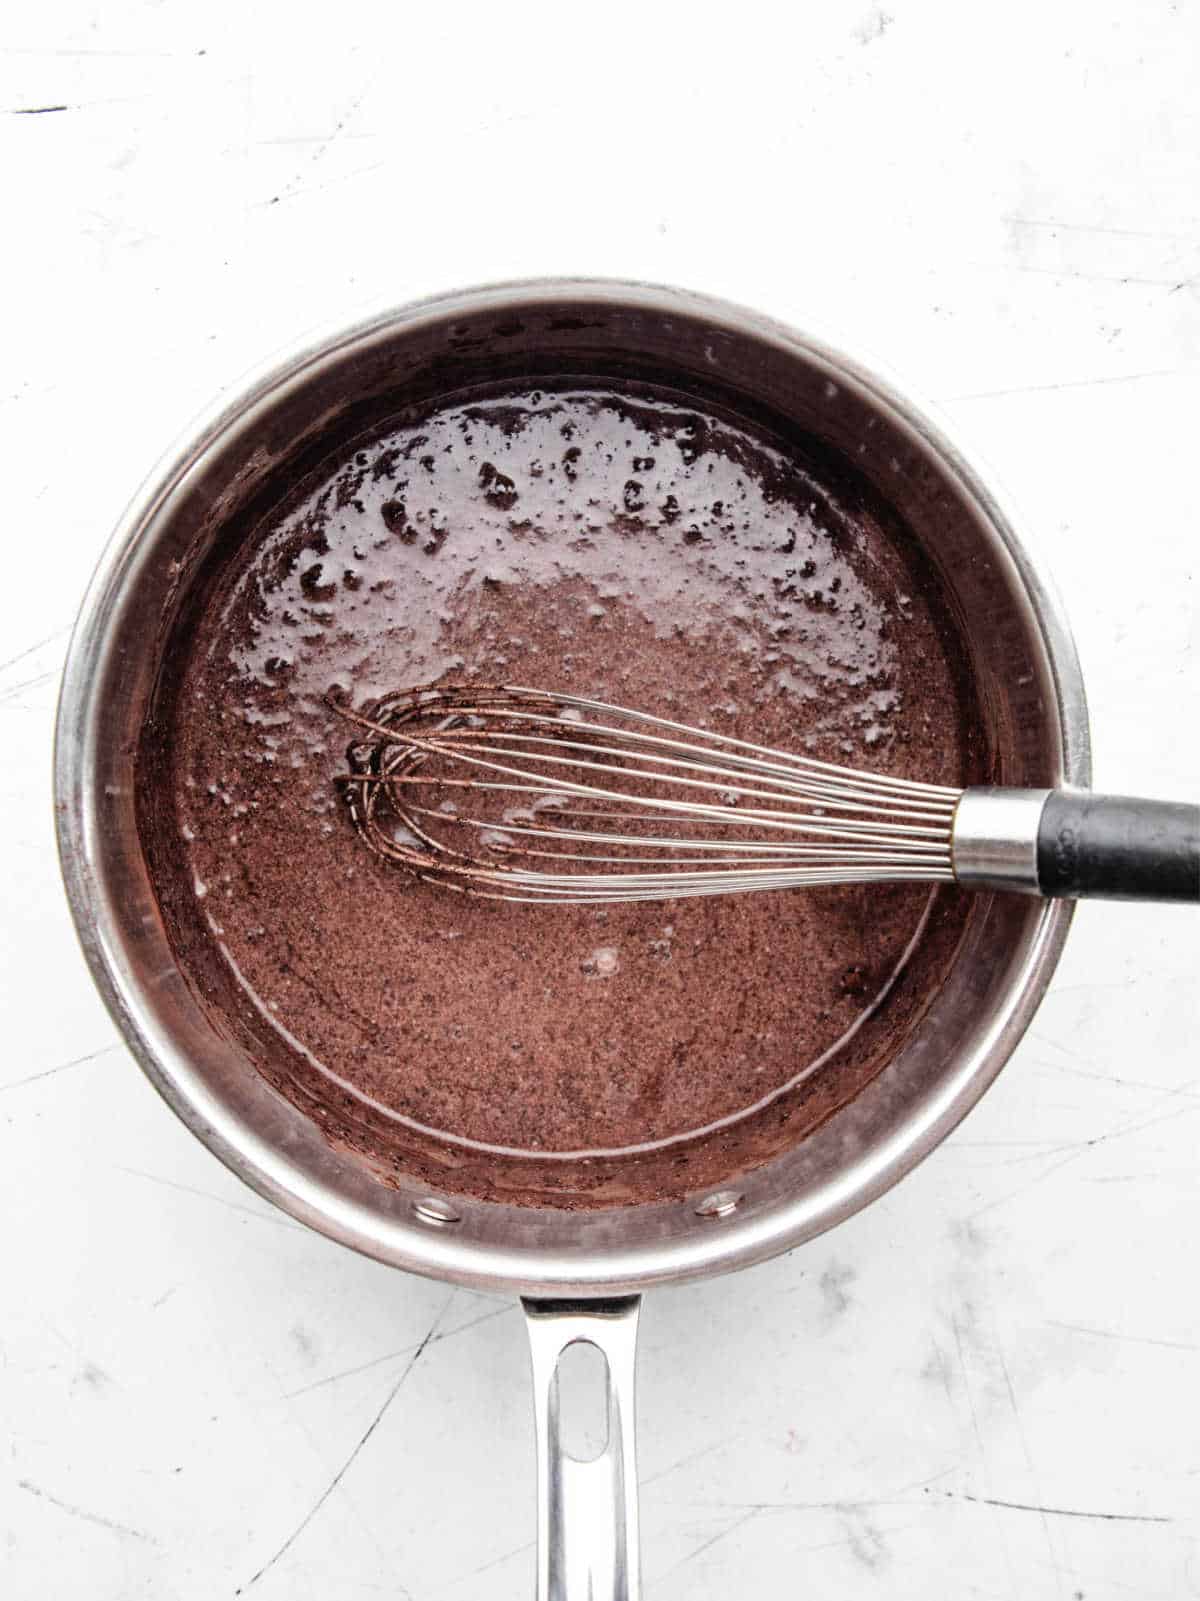 Heavy cream, brown sugar, and cocoa powder in a saucepan.